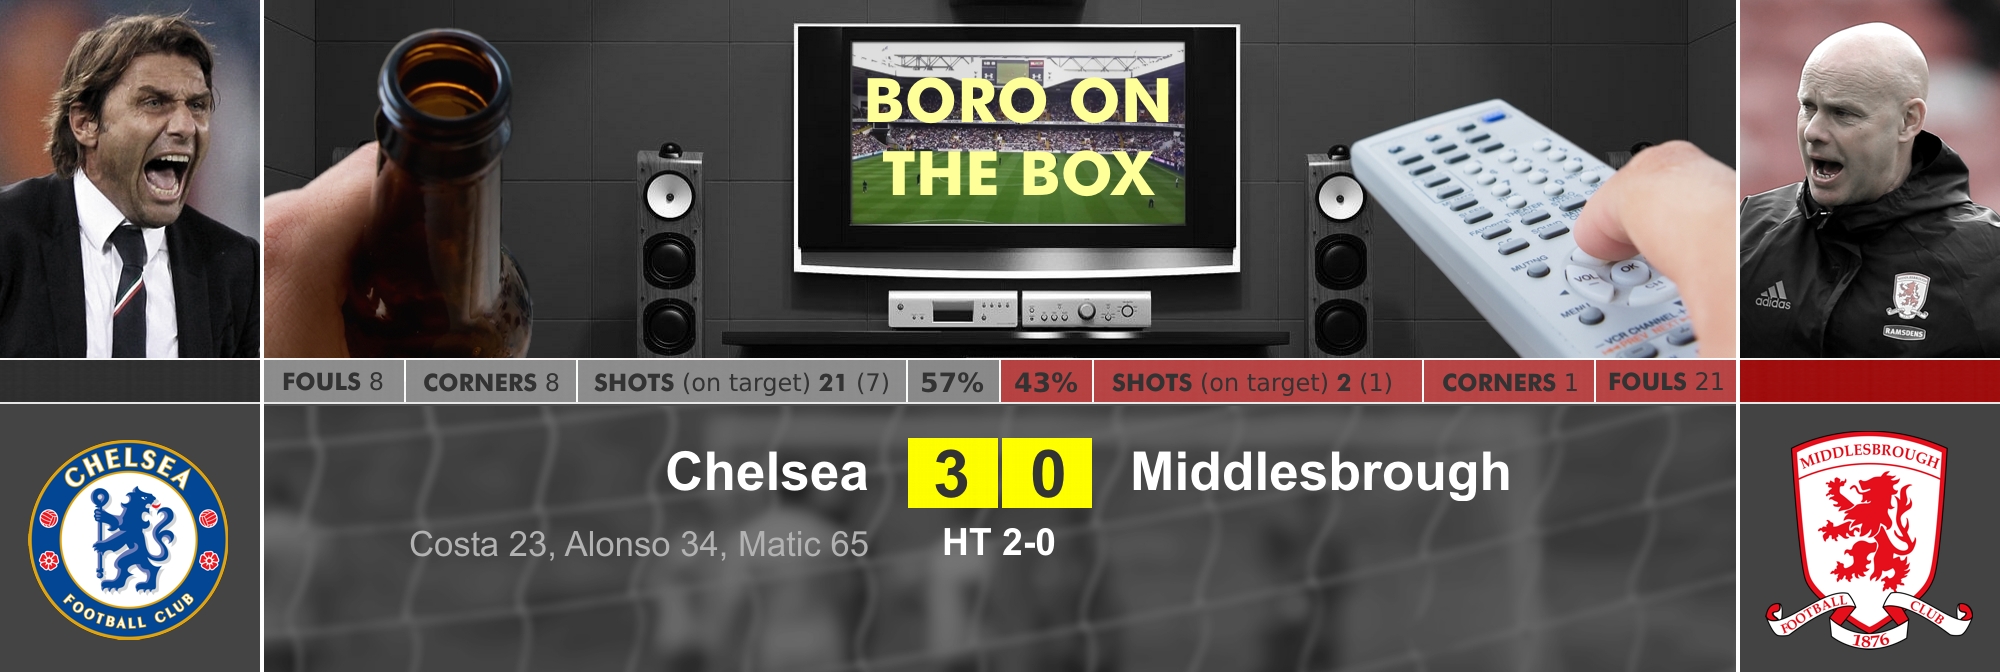 Match Report - Chelsea